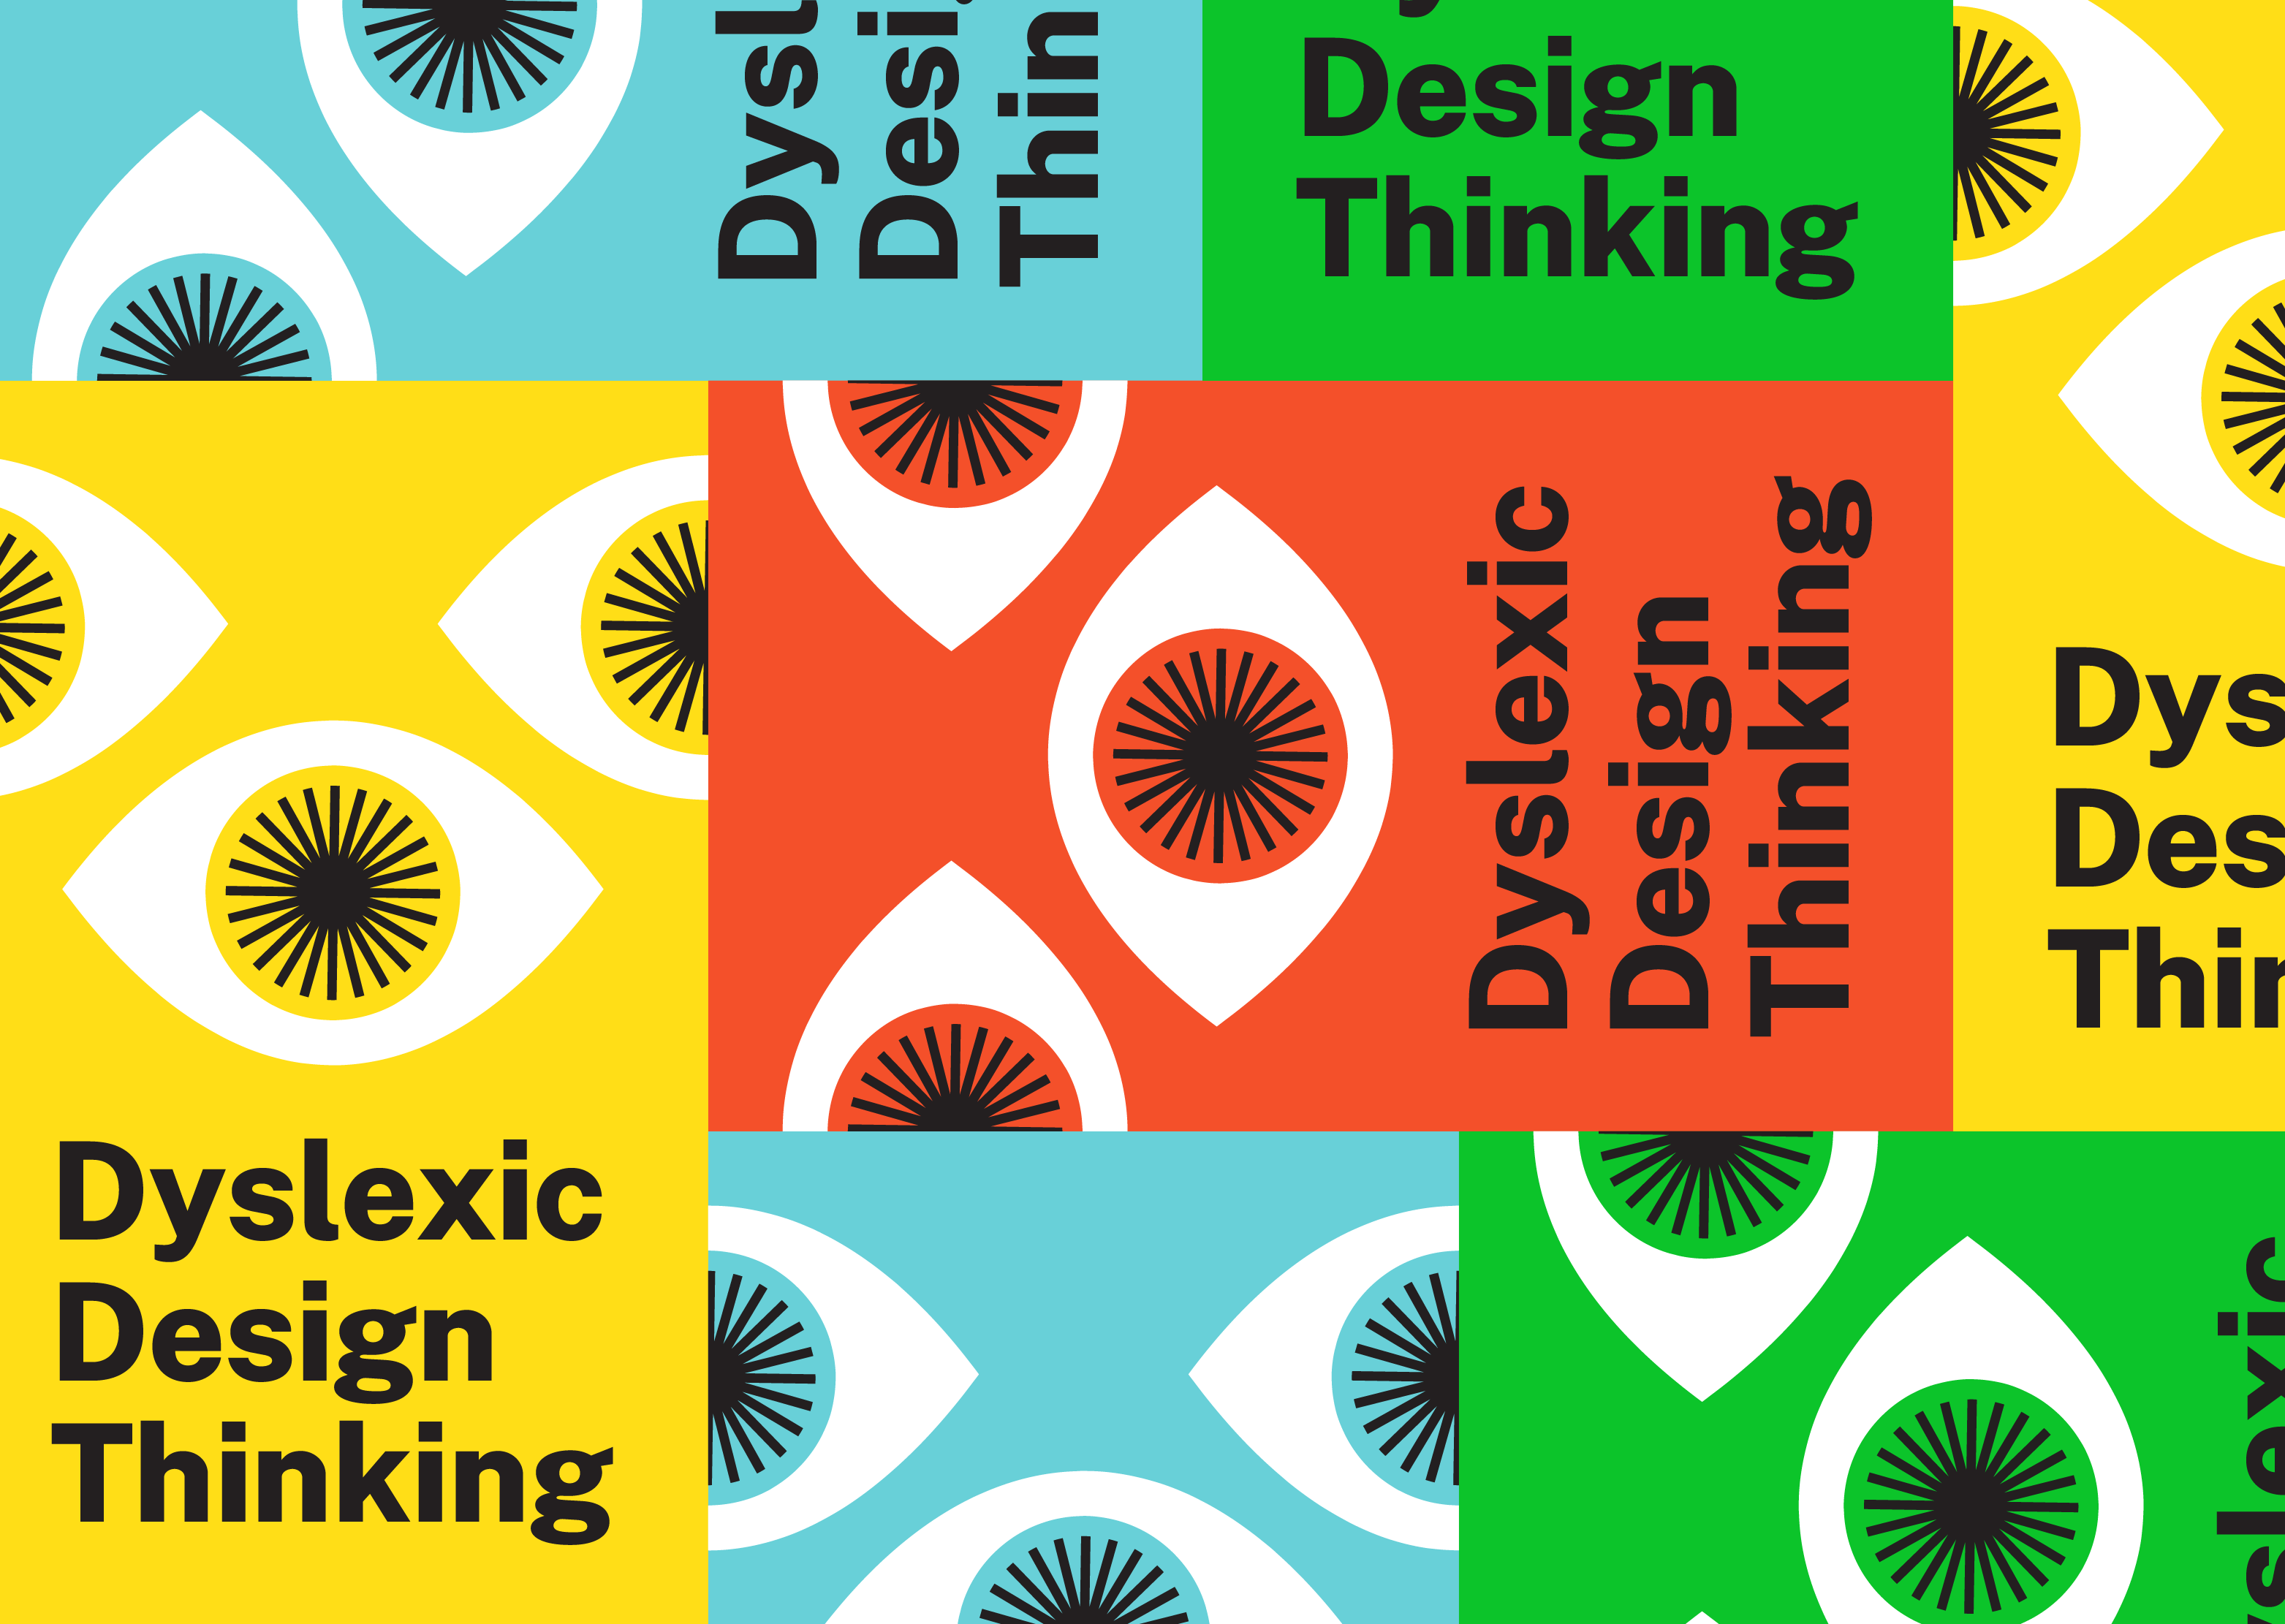 Gershoni Website Culture Thumb Dyslexic Design Thinking 092120